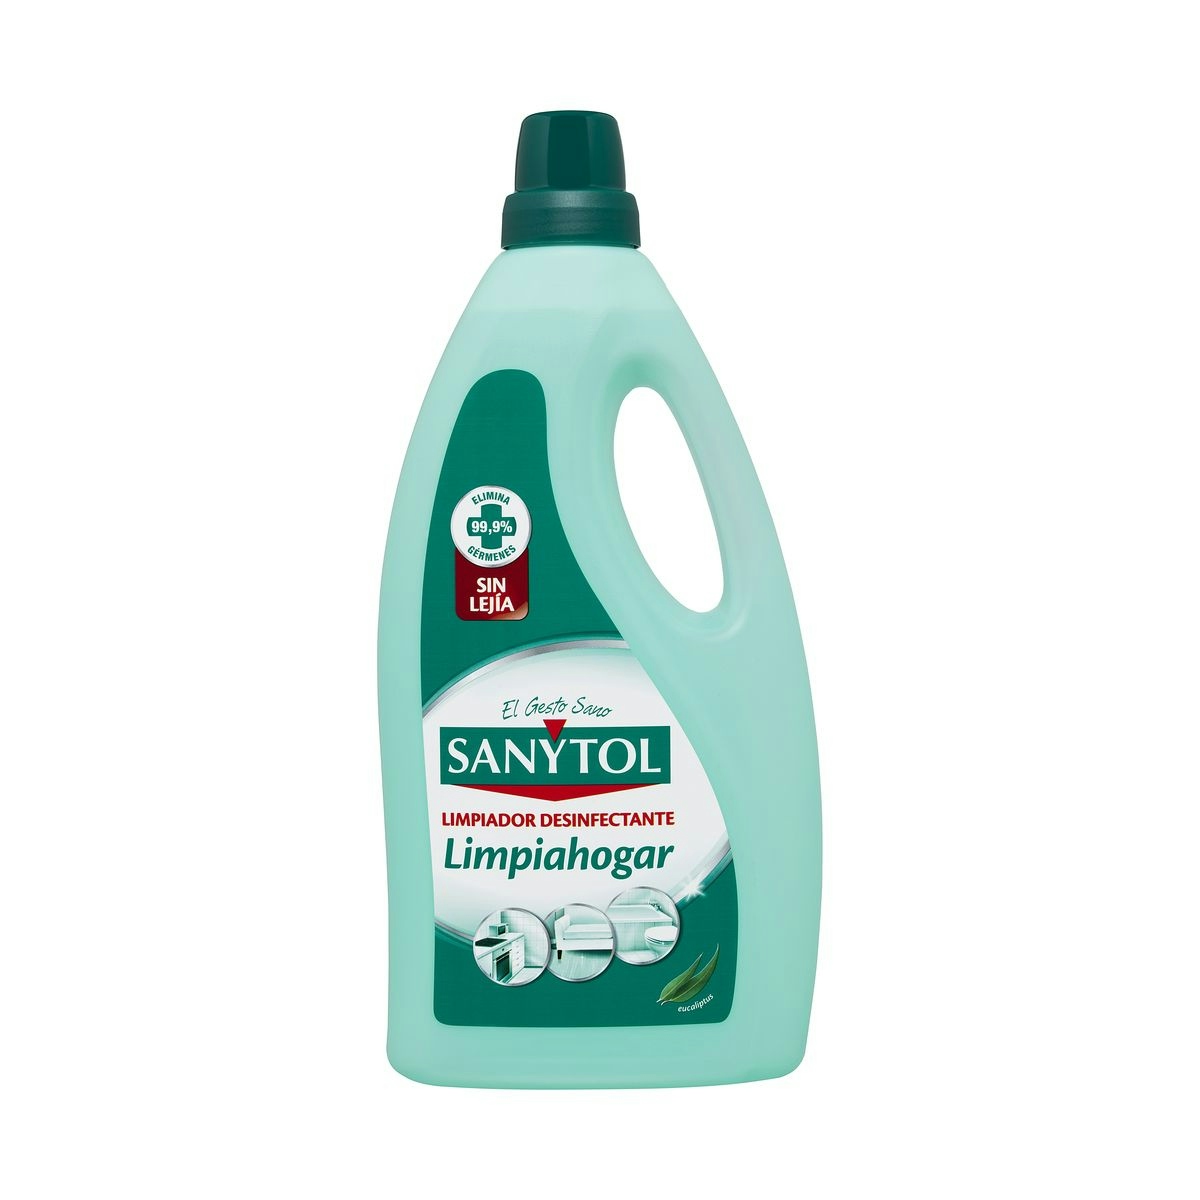 Limpiador desinfectante SANYTOL limpiahogar botella 1,2 lt